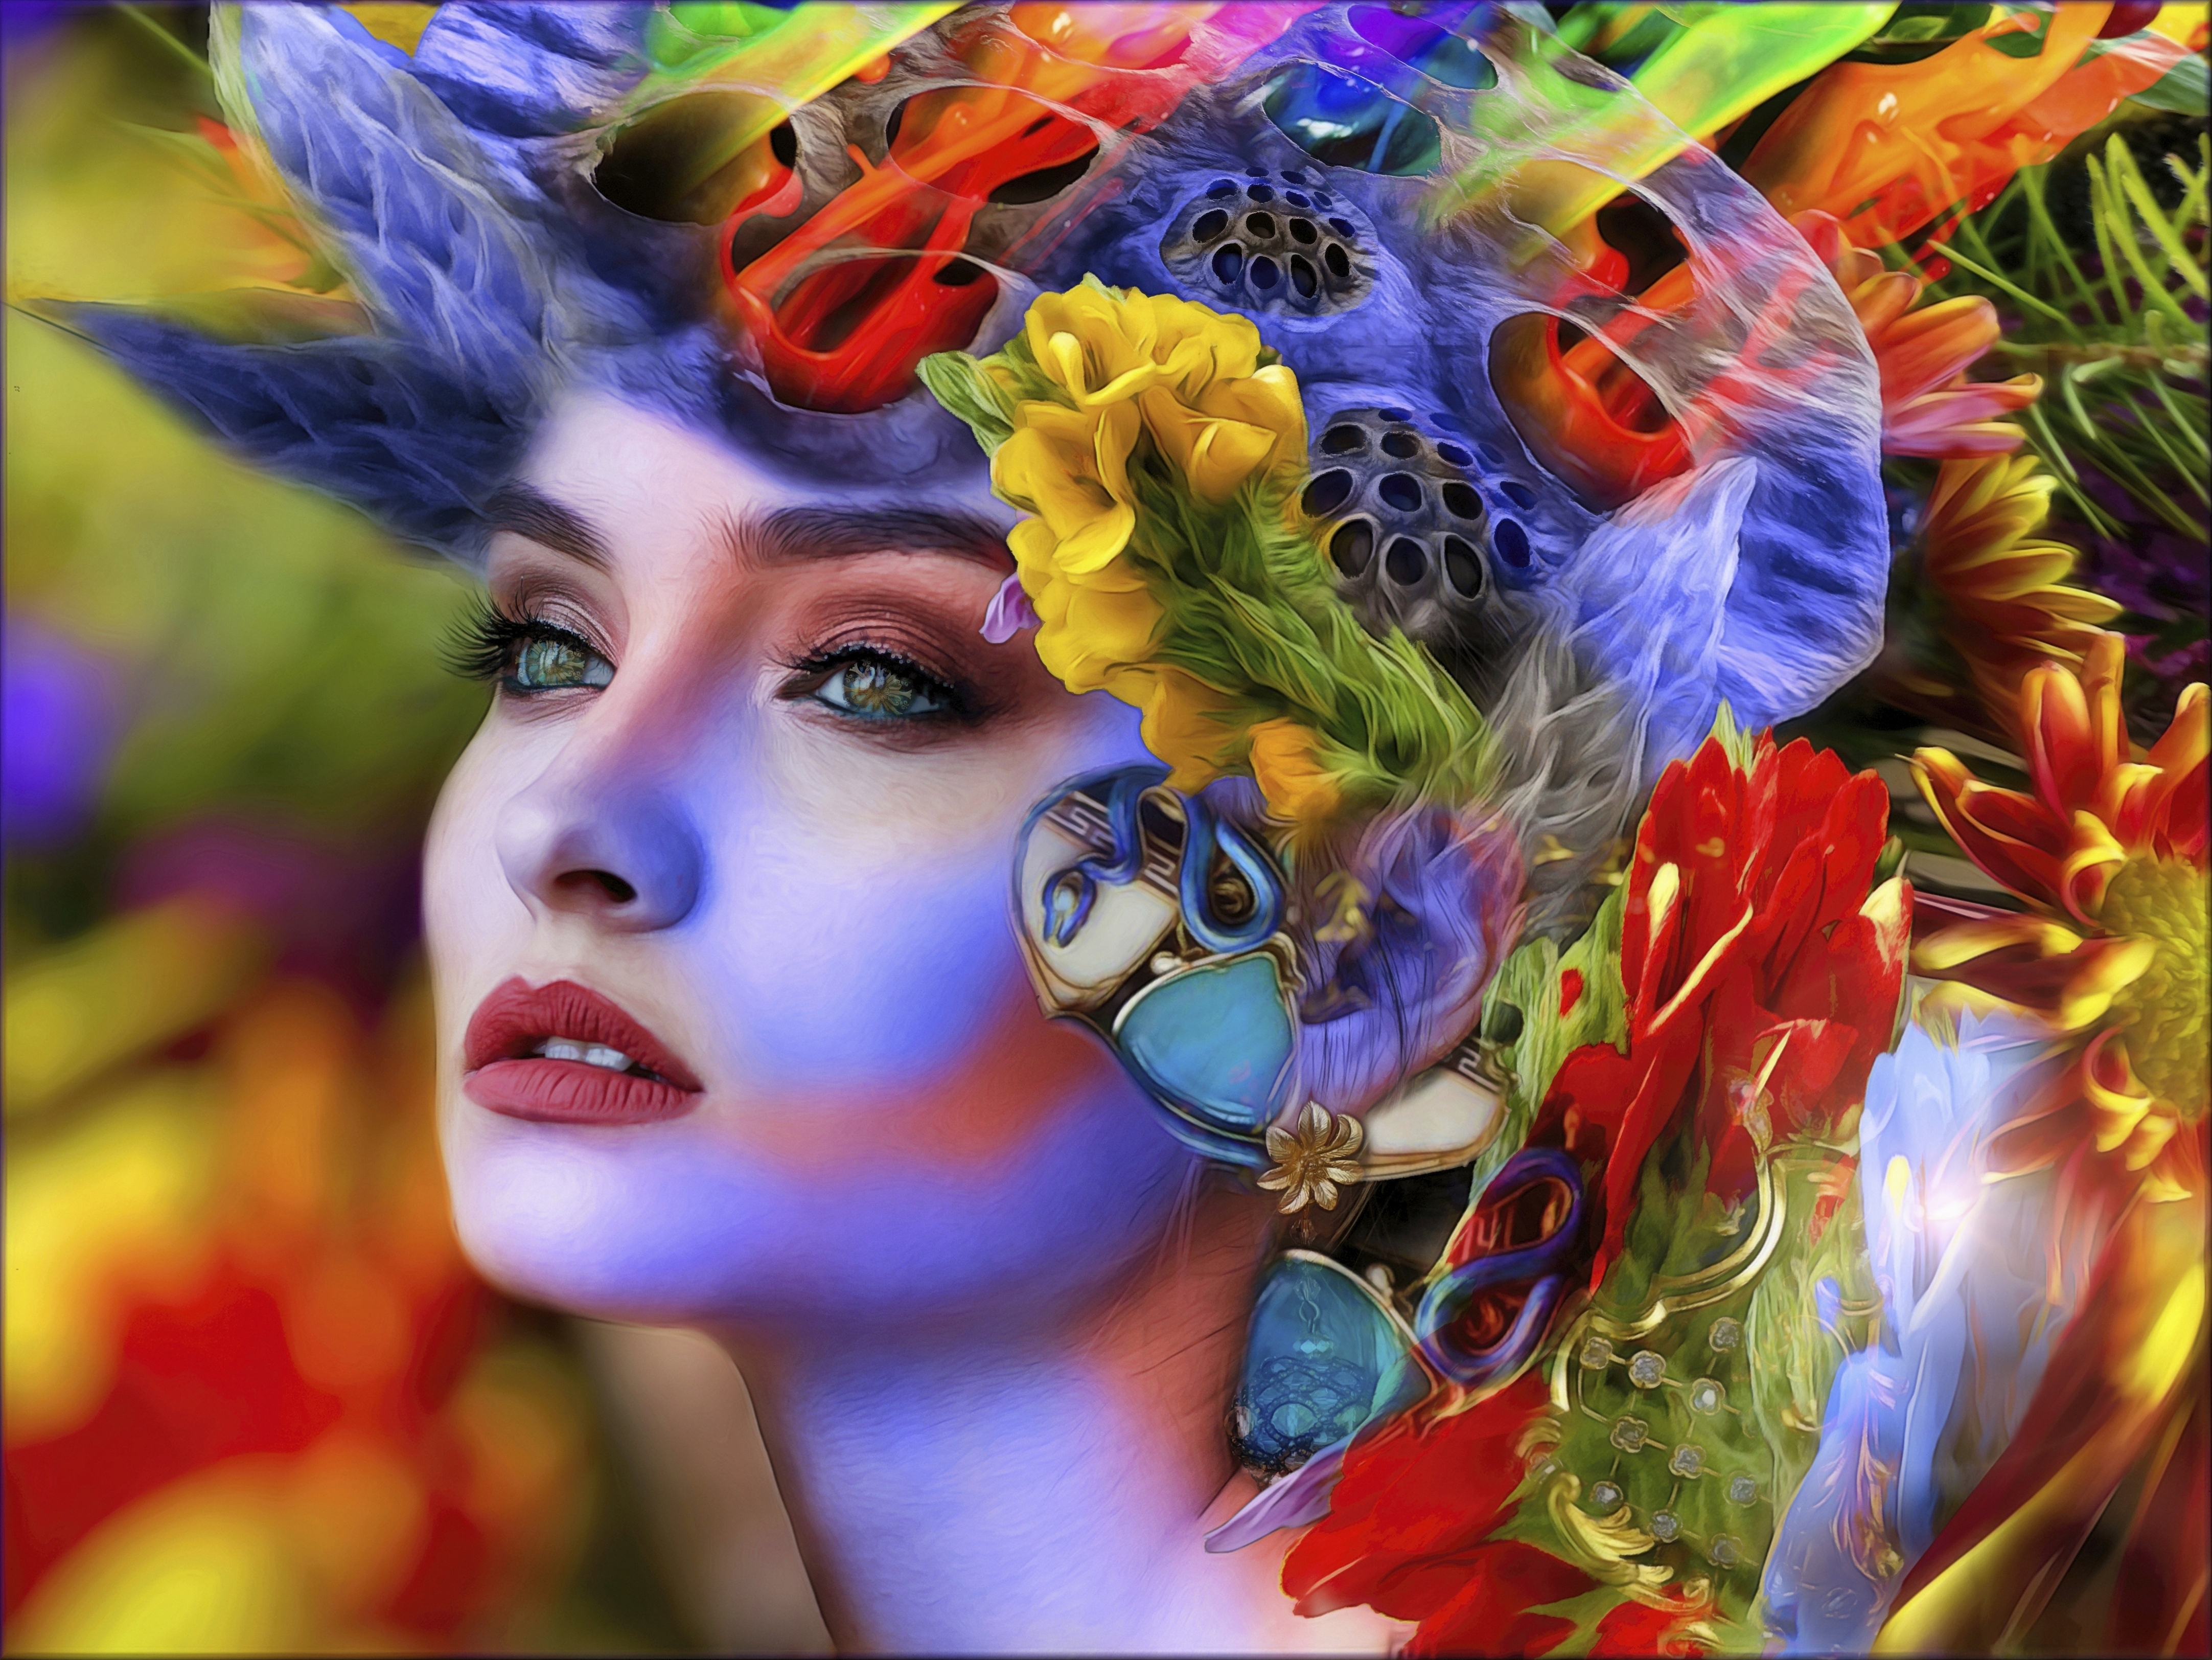 Wallpapers photoshop beauty portrait photo on the desktop